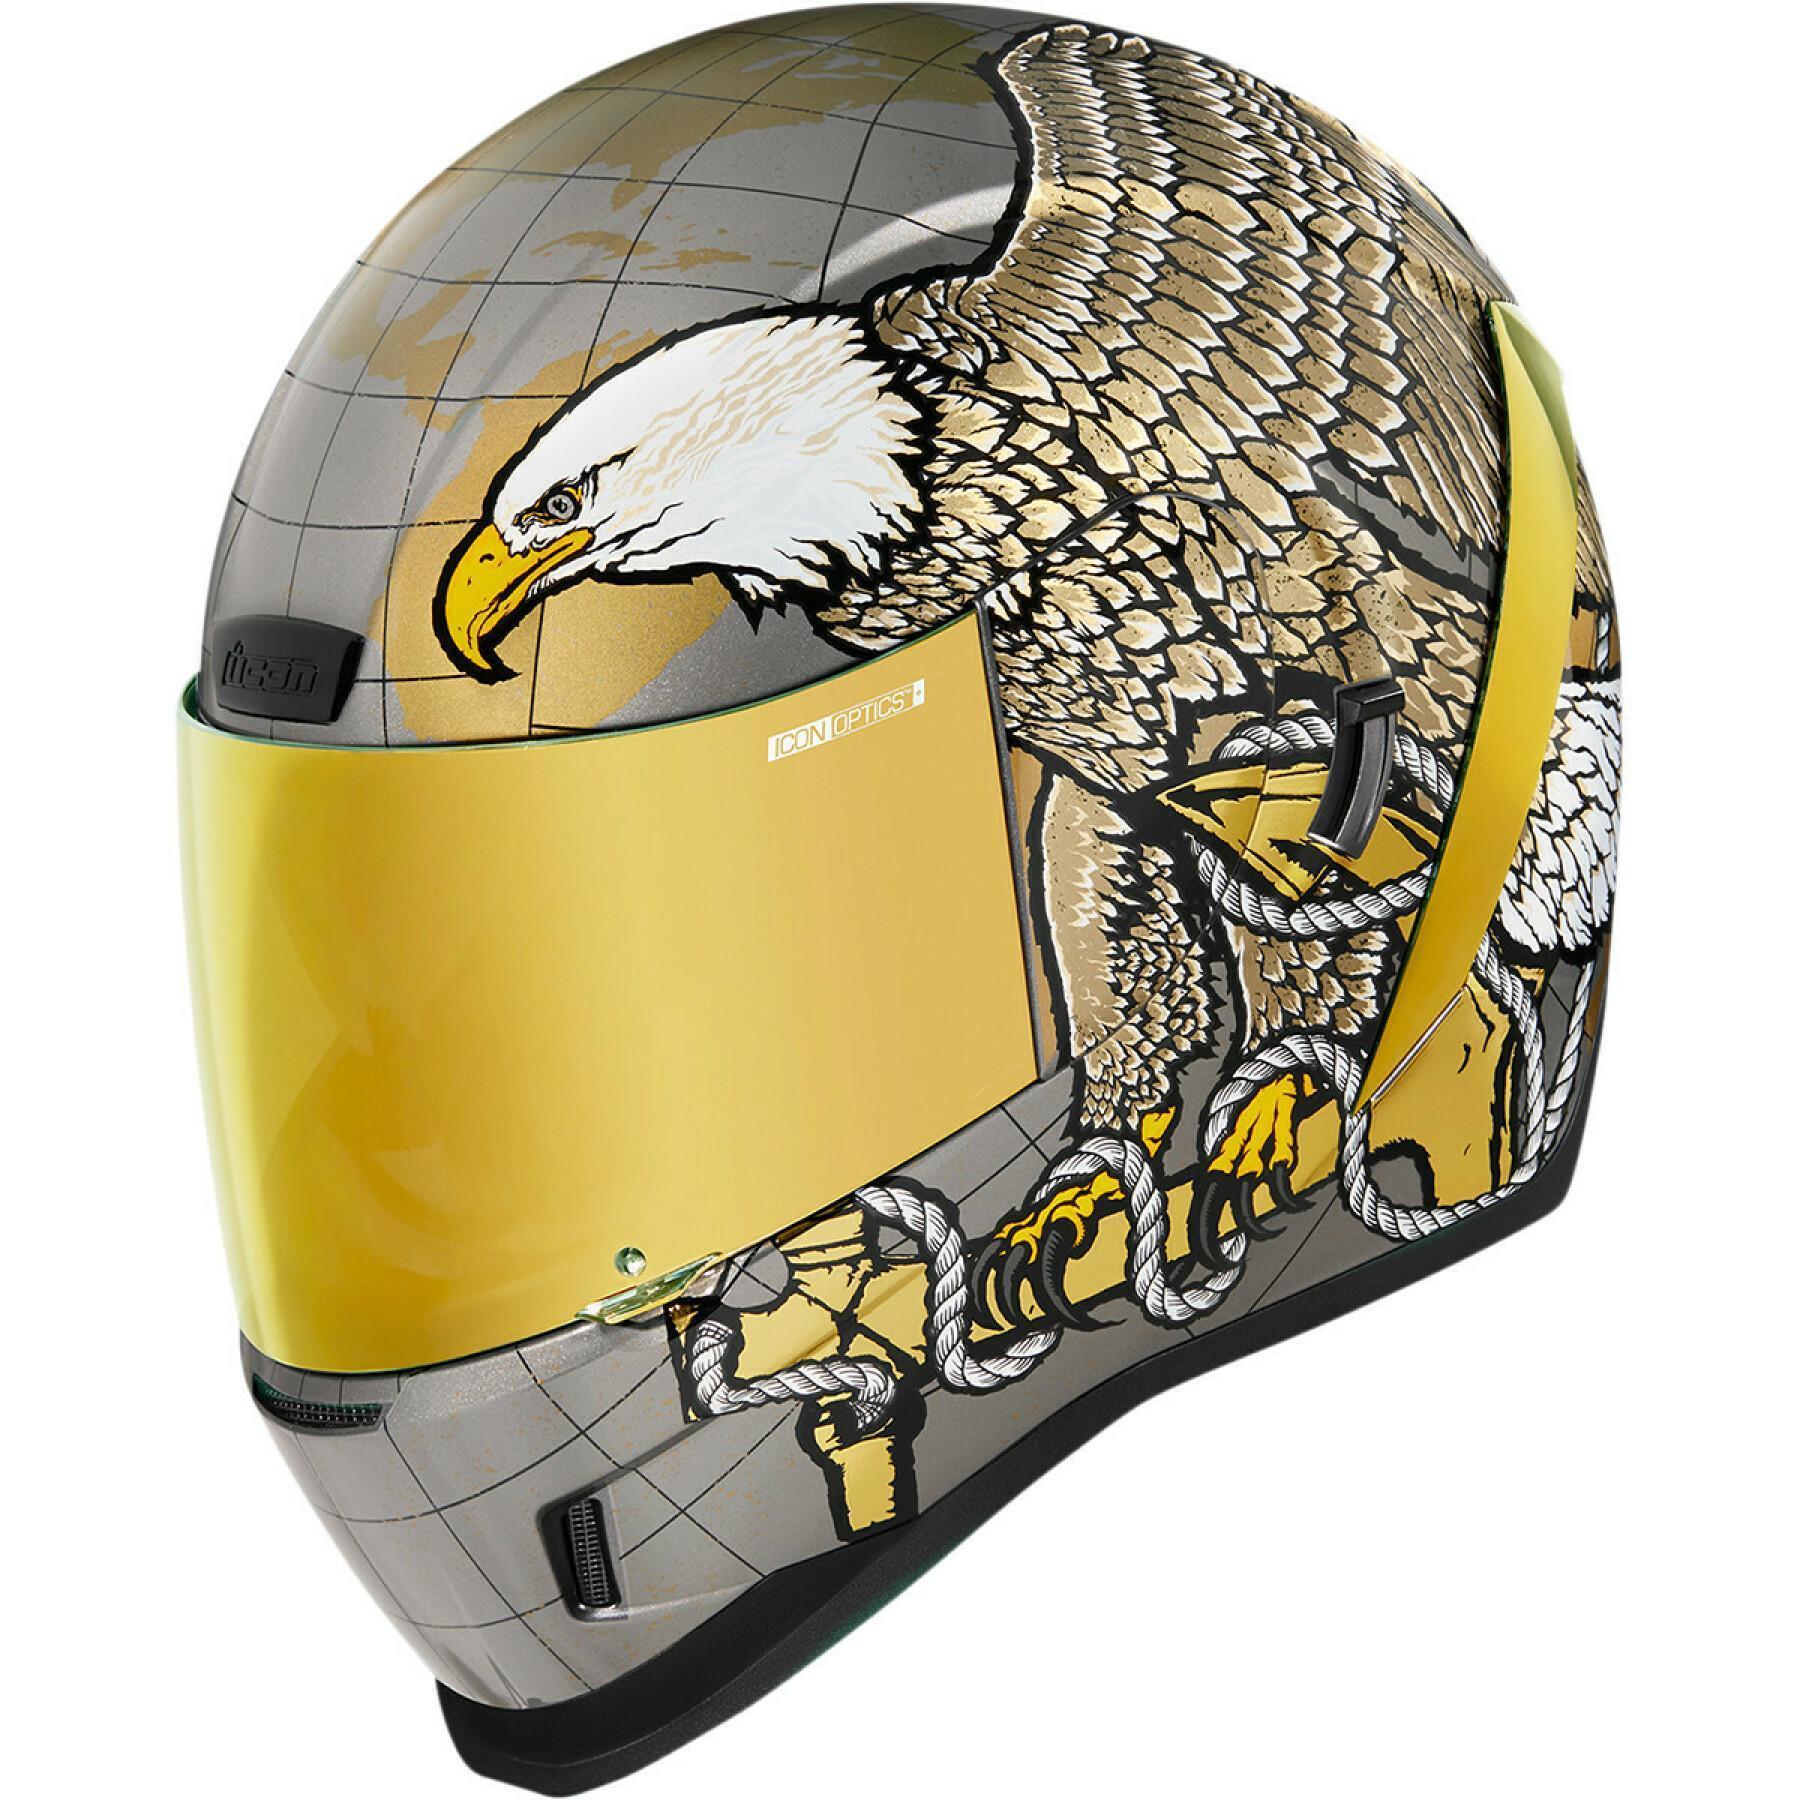 Full face motorcycle helmet Icon afrm semper fi